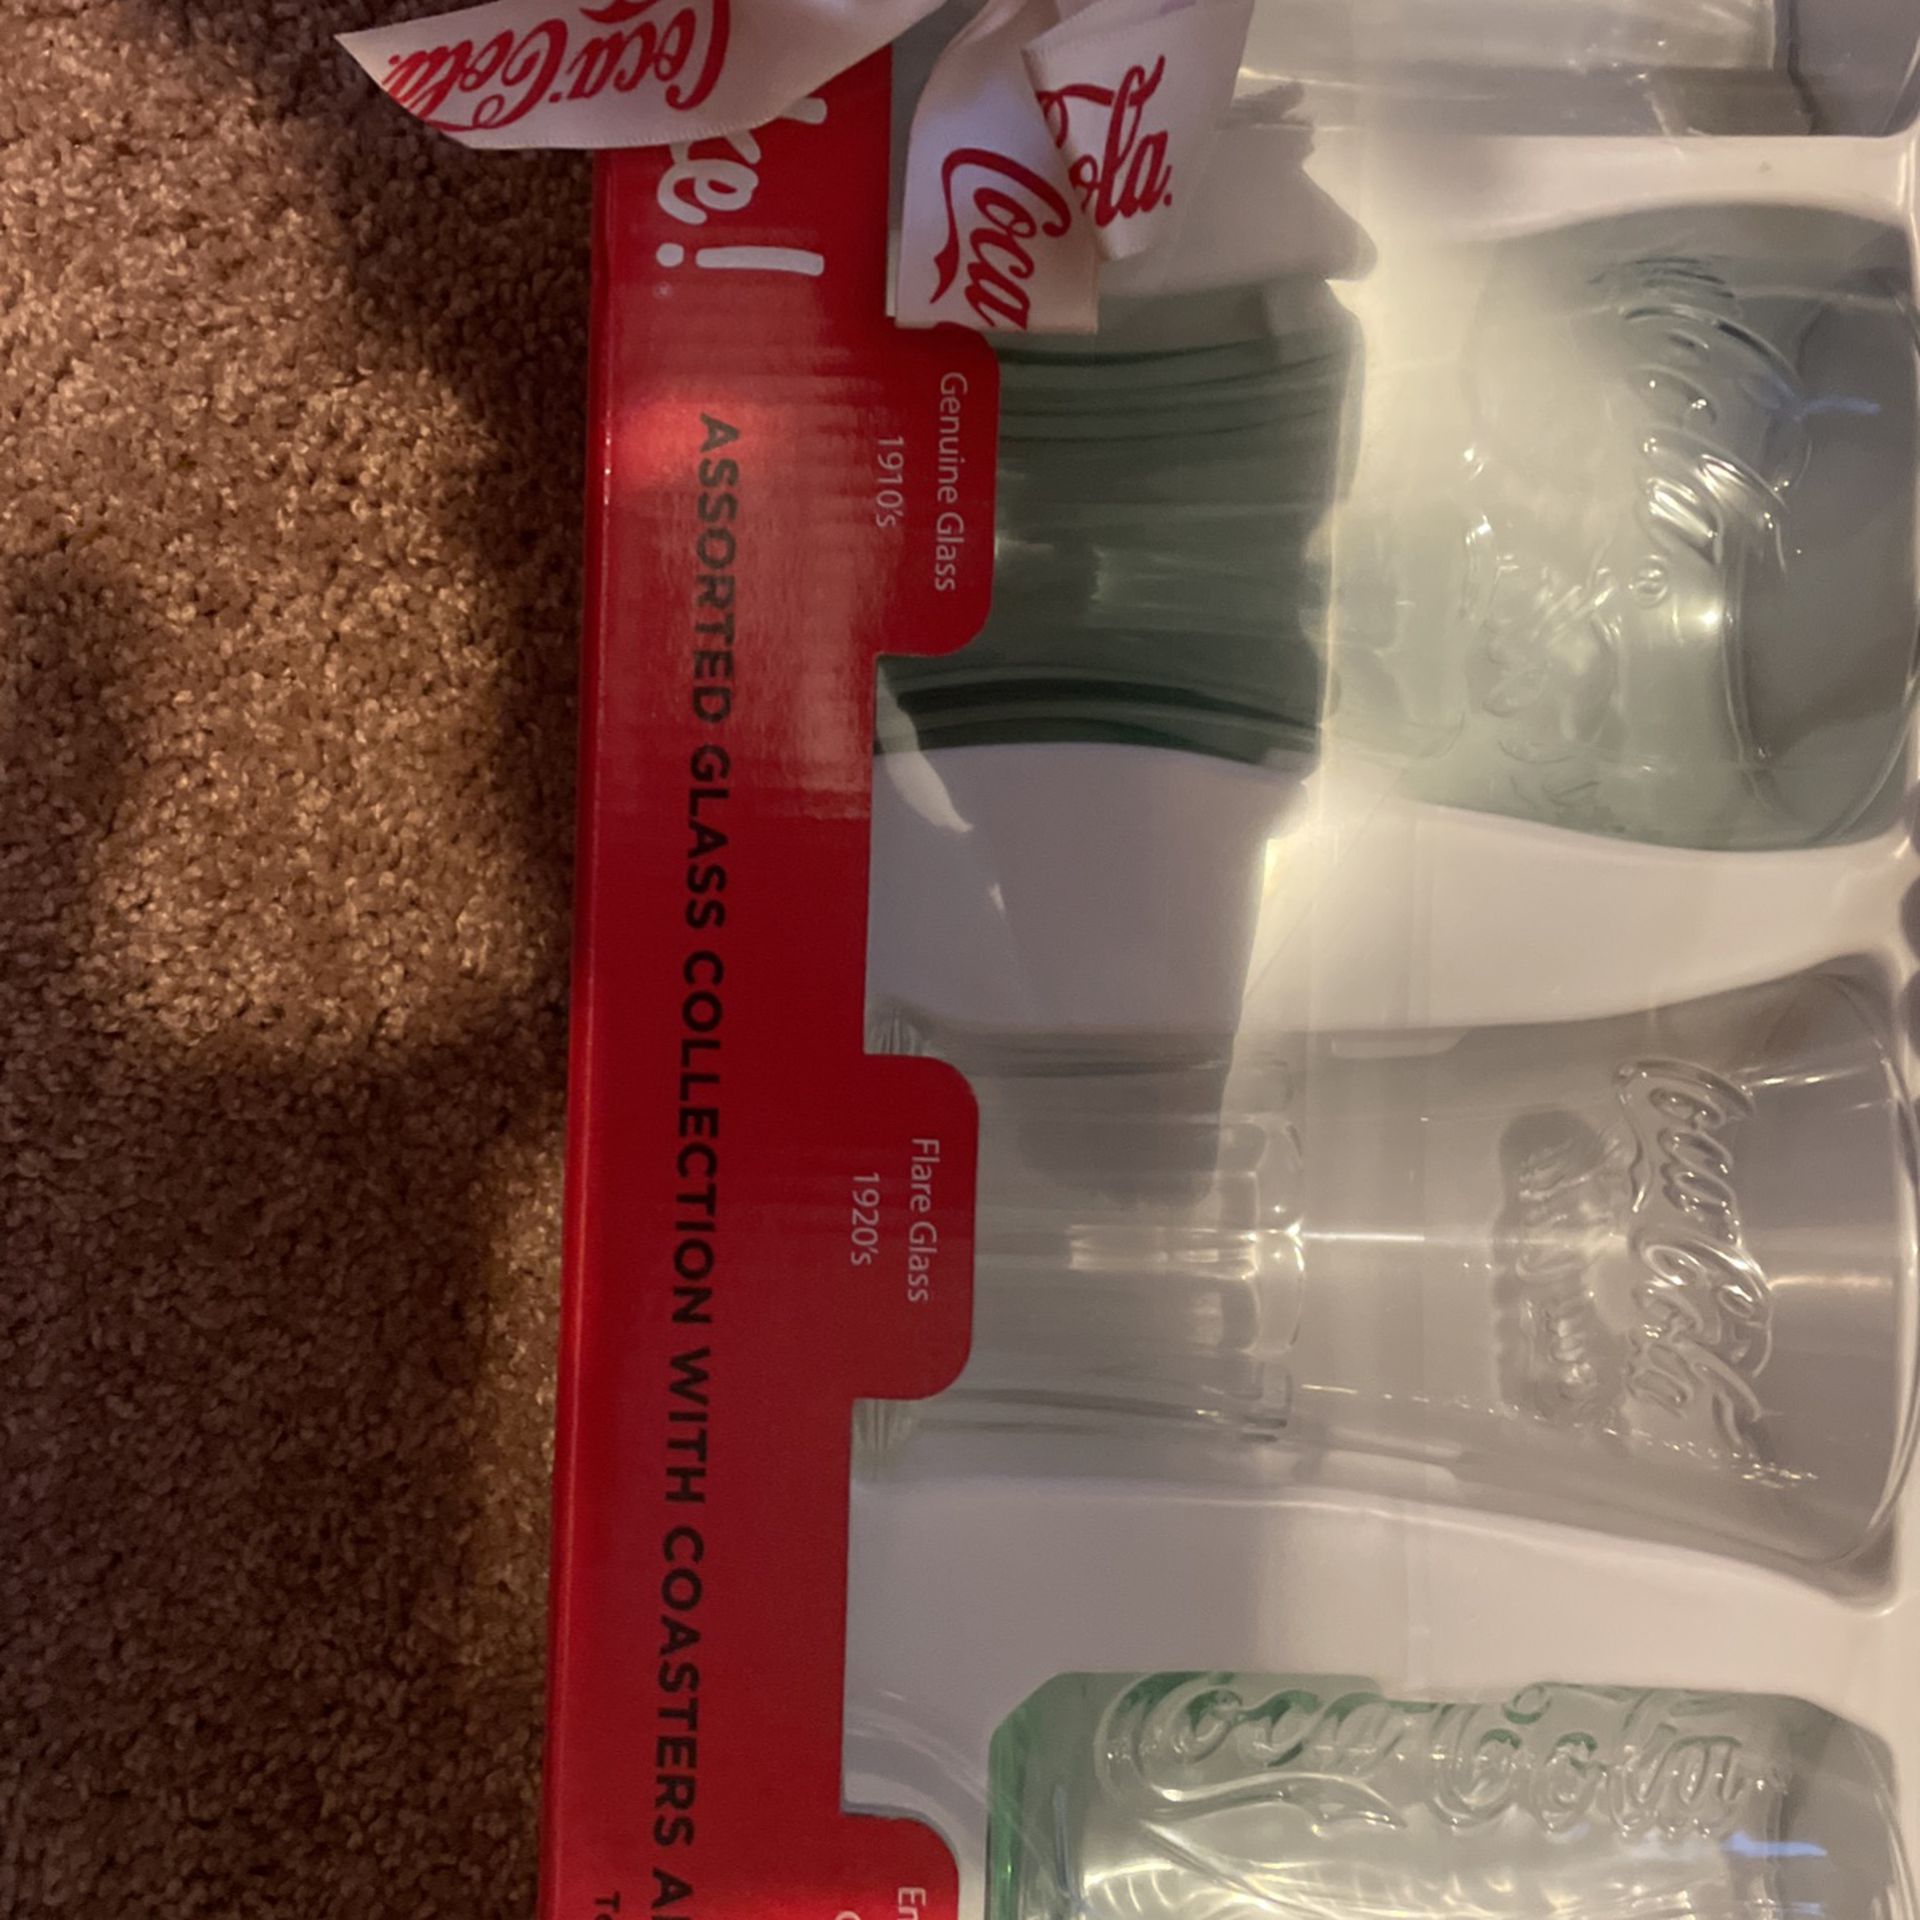 Brand New Coke Set 